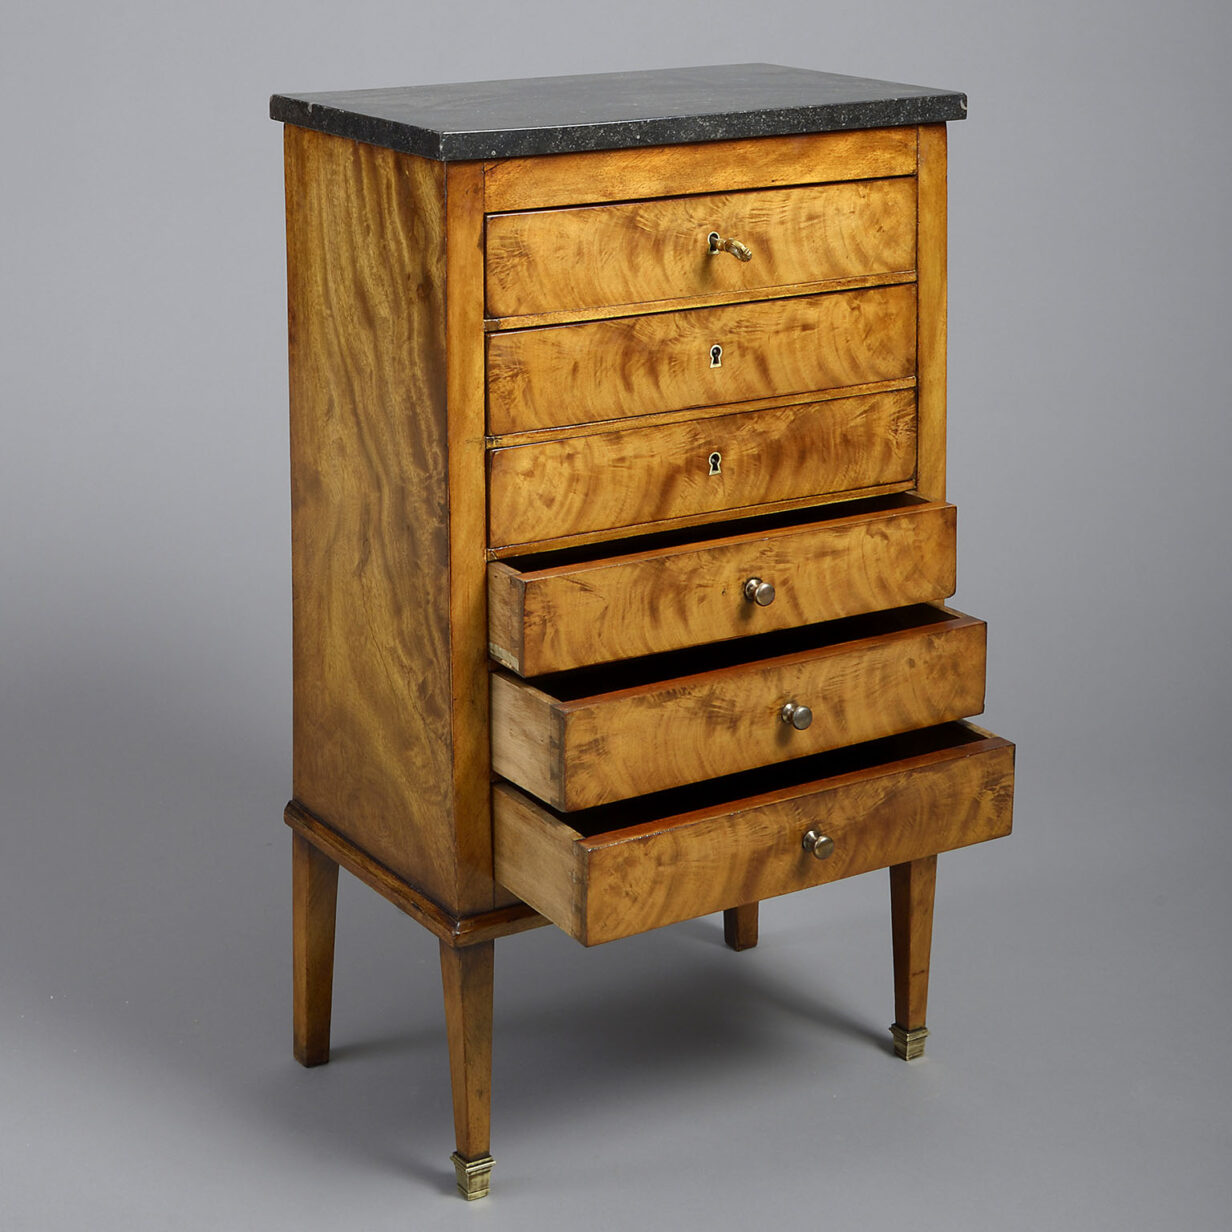 Small scale late 18th century directoire period mahogany chest